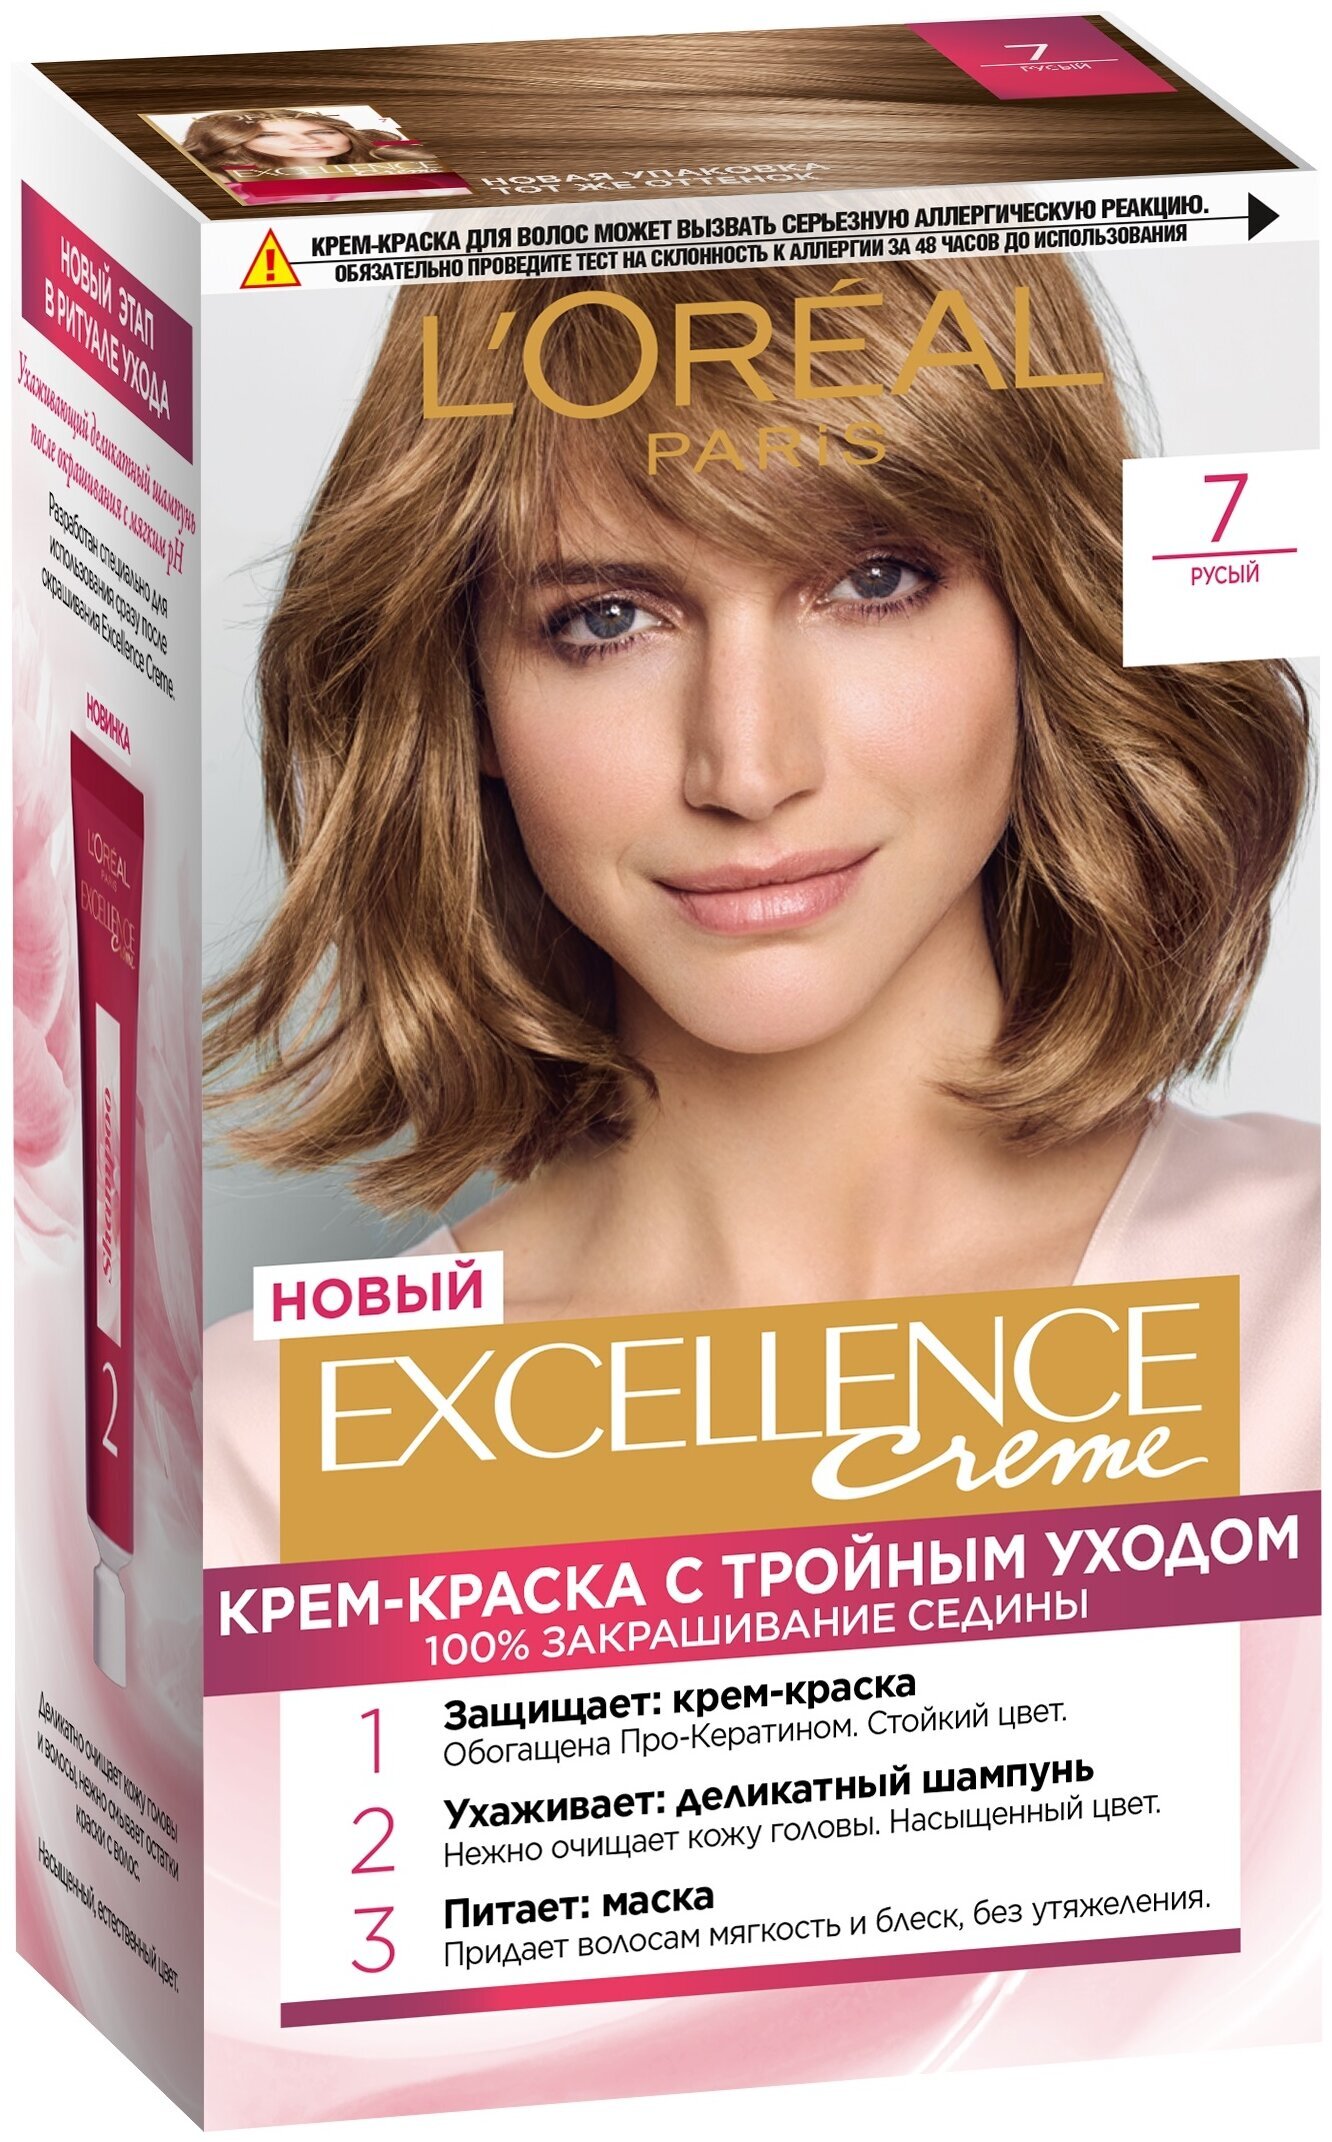 Краска для волос экселанс русый. Excellence Creme Loreal 7,7. Краска для волос лореаль экселанс 7. Краска лореаль экселанс русый. Краска для волос лореаль экселанс 7.1.